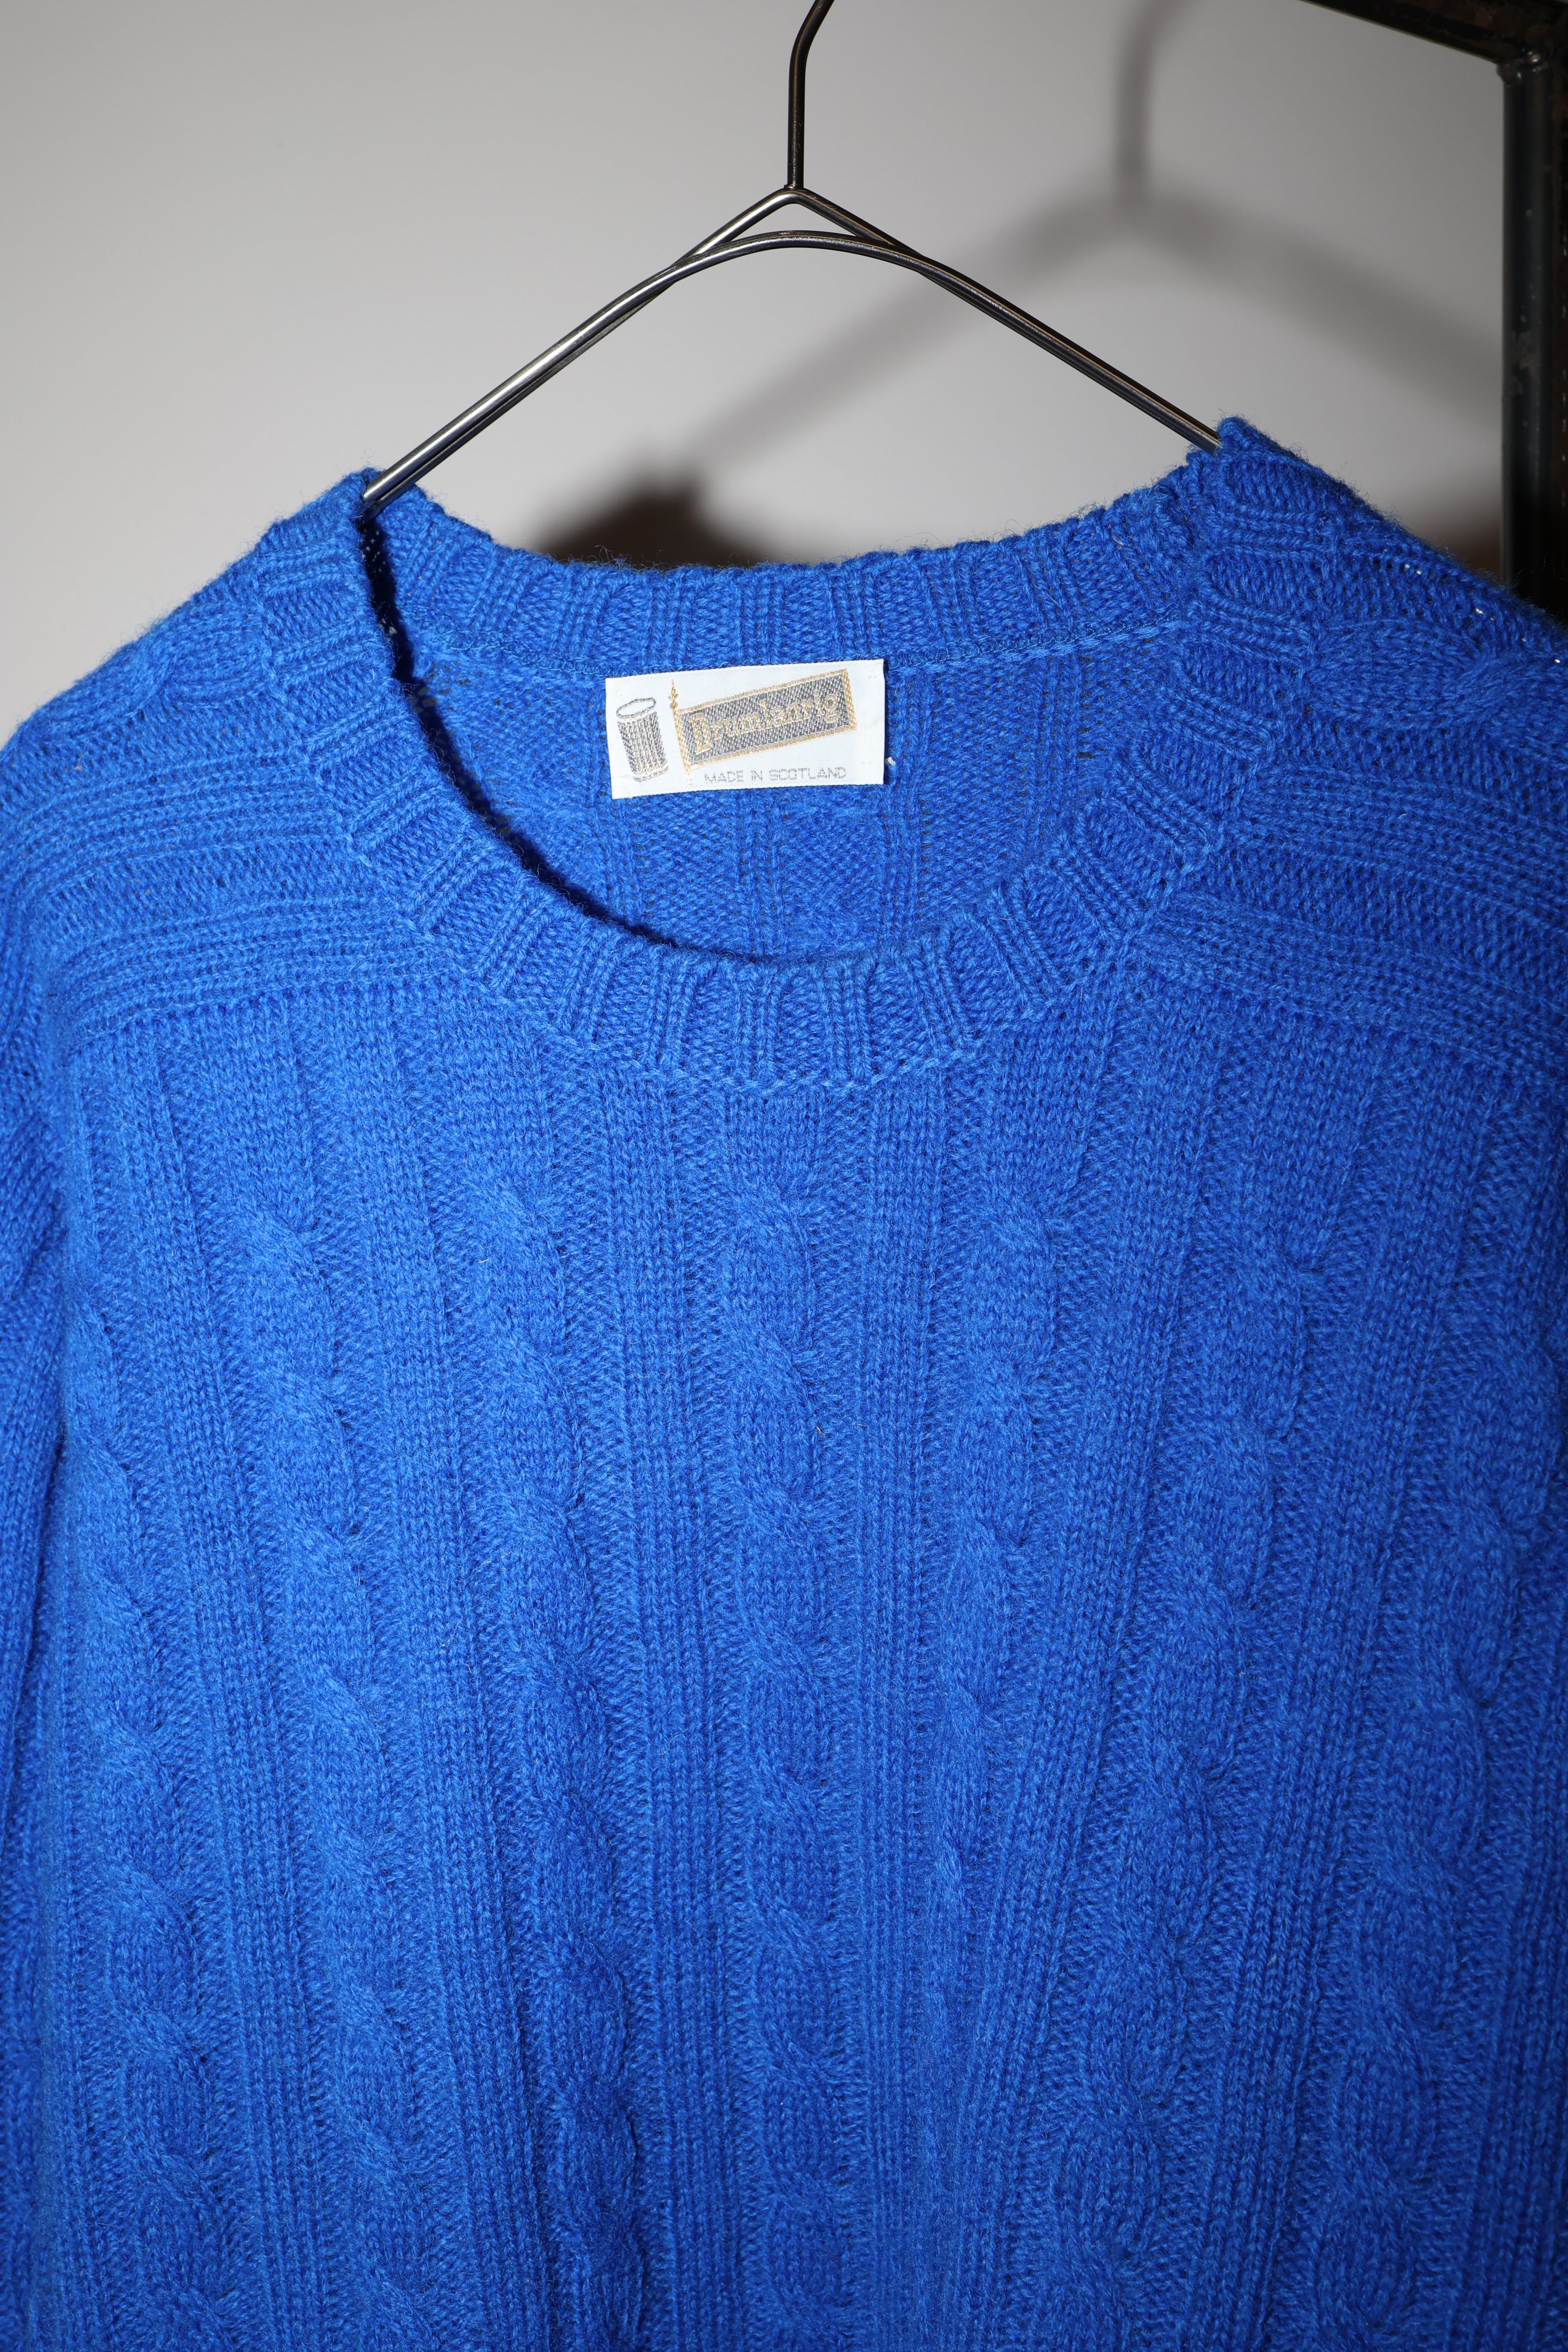 circa 70's vivid blue wool knit sweater